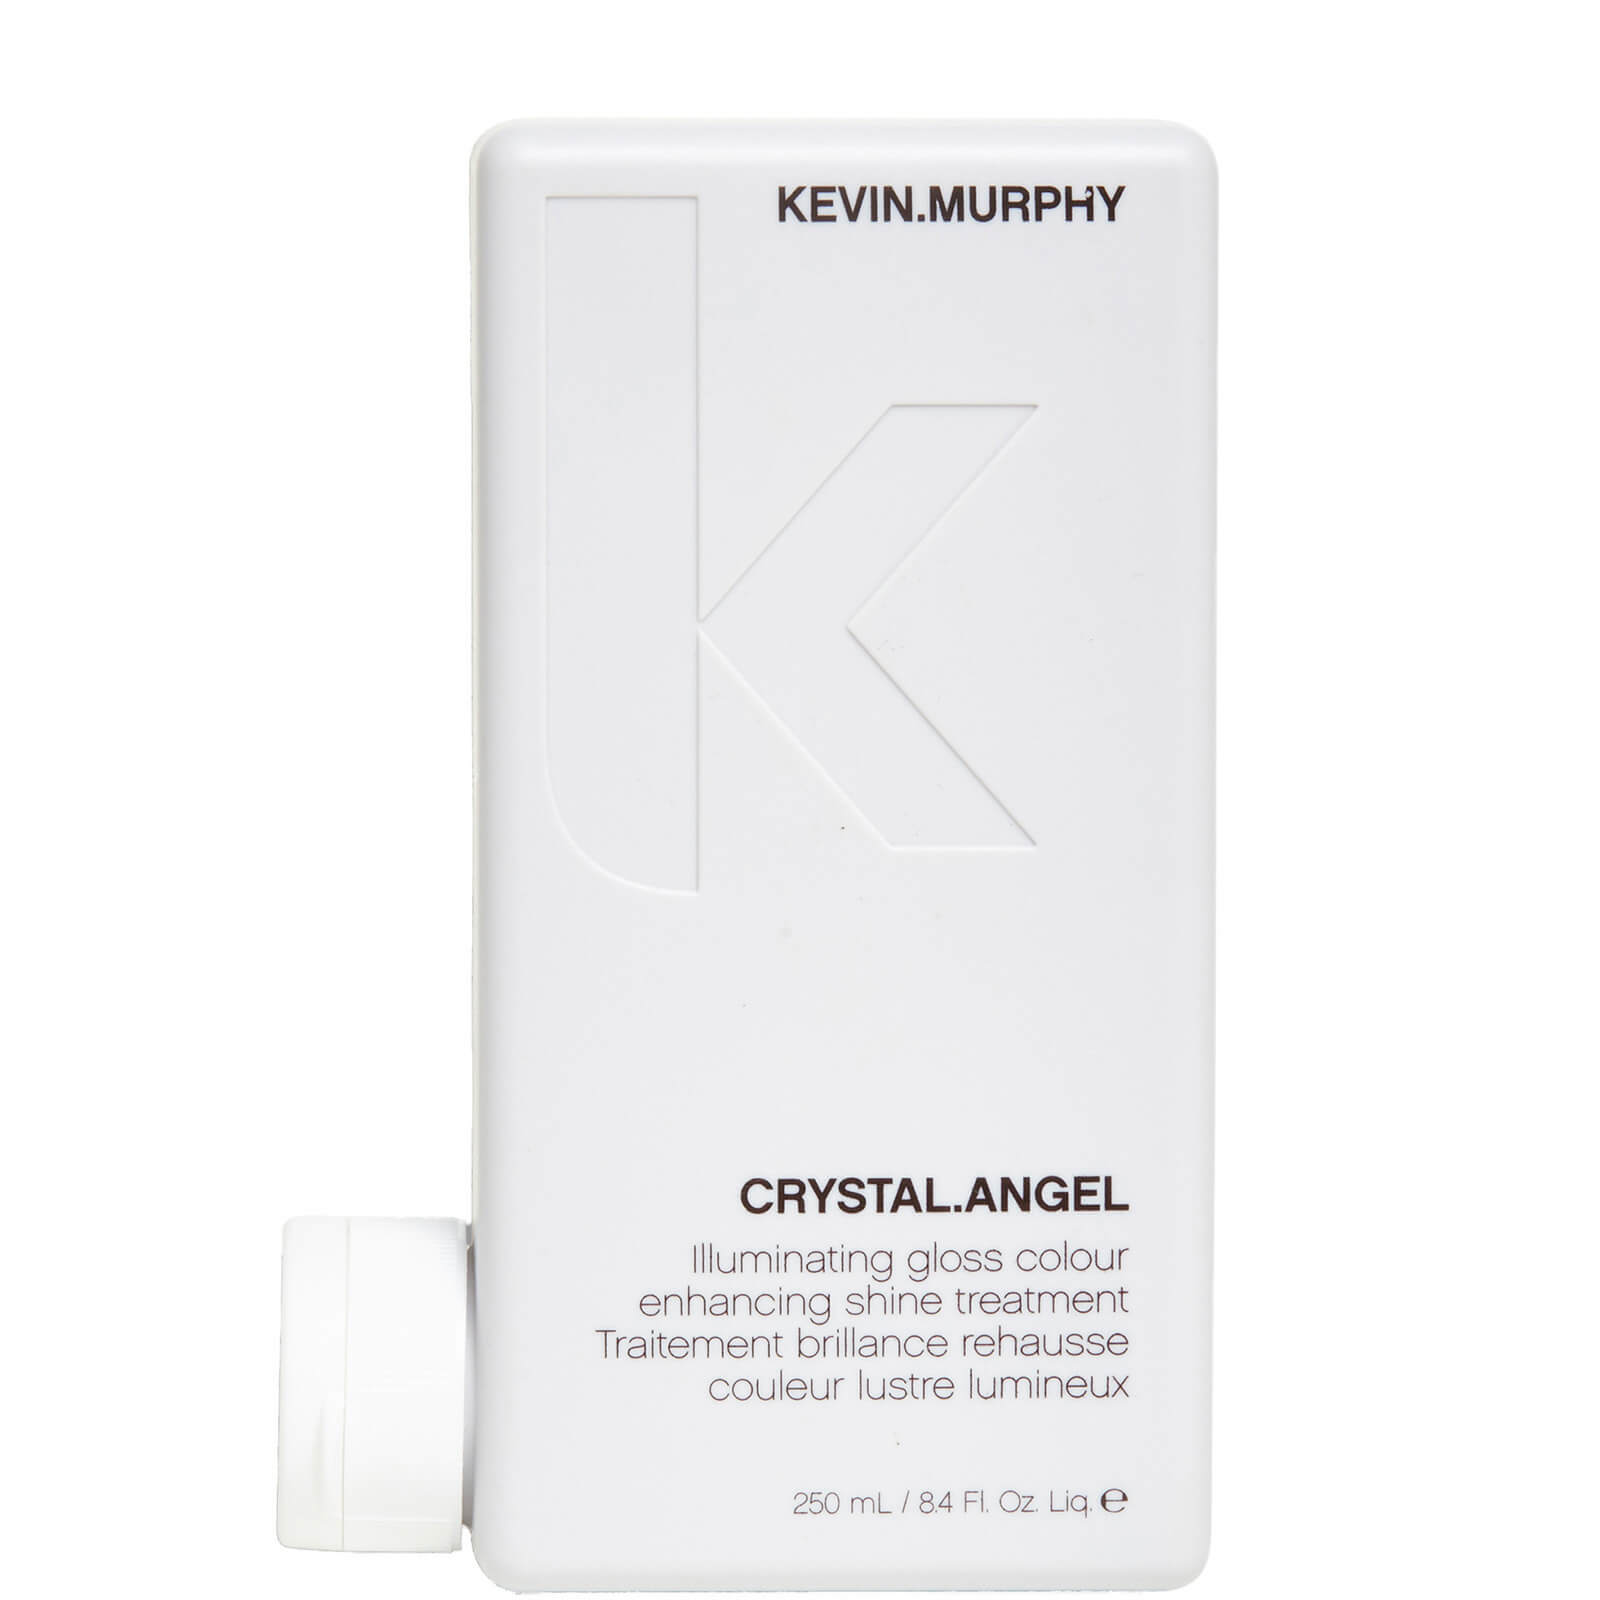 Photos - Hair Product KEVIN.MURPHY Crystal.Angel